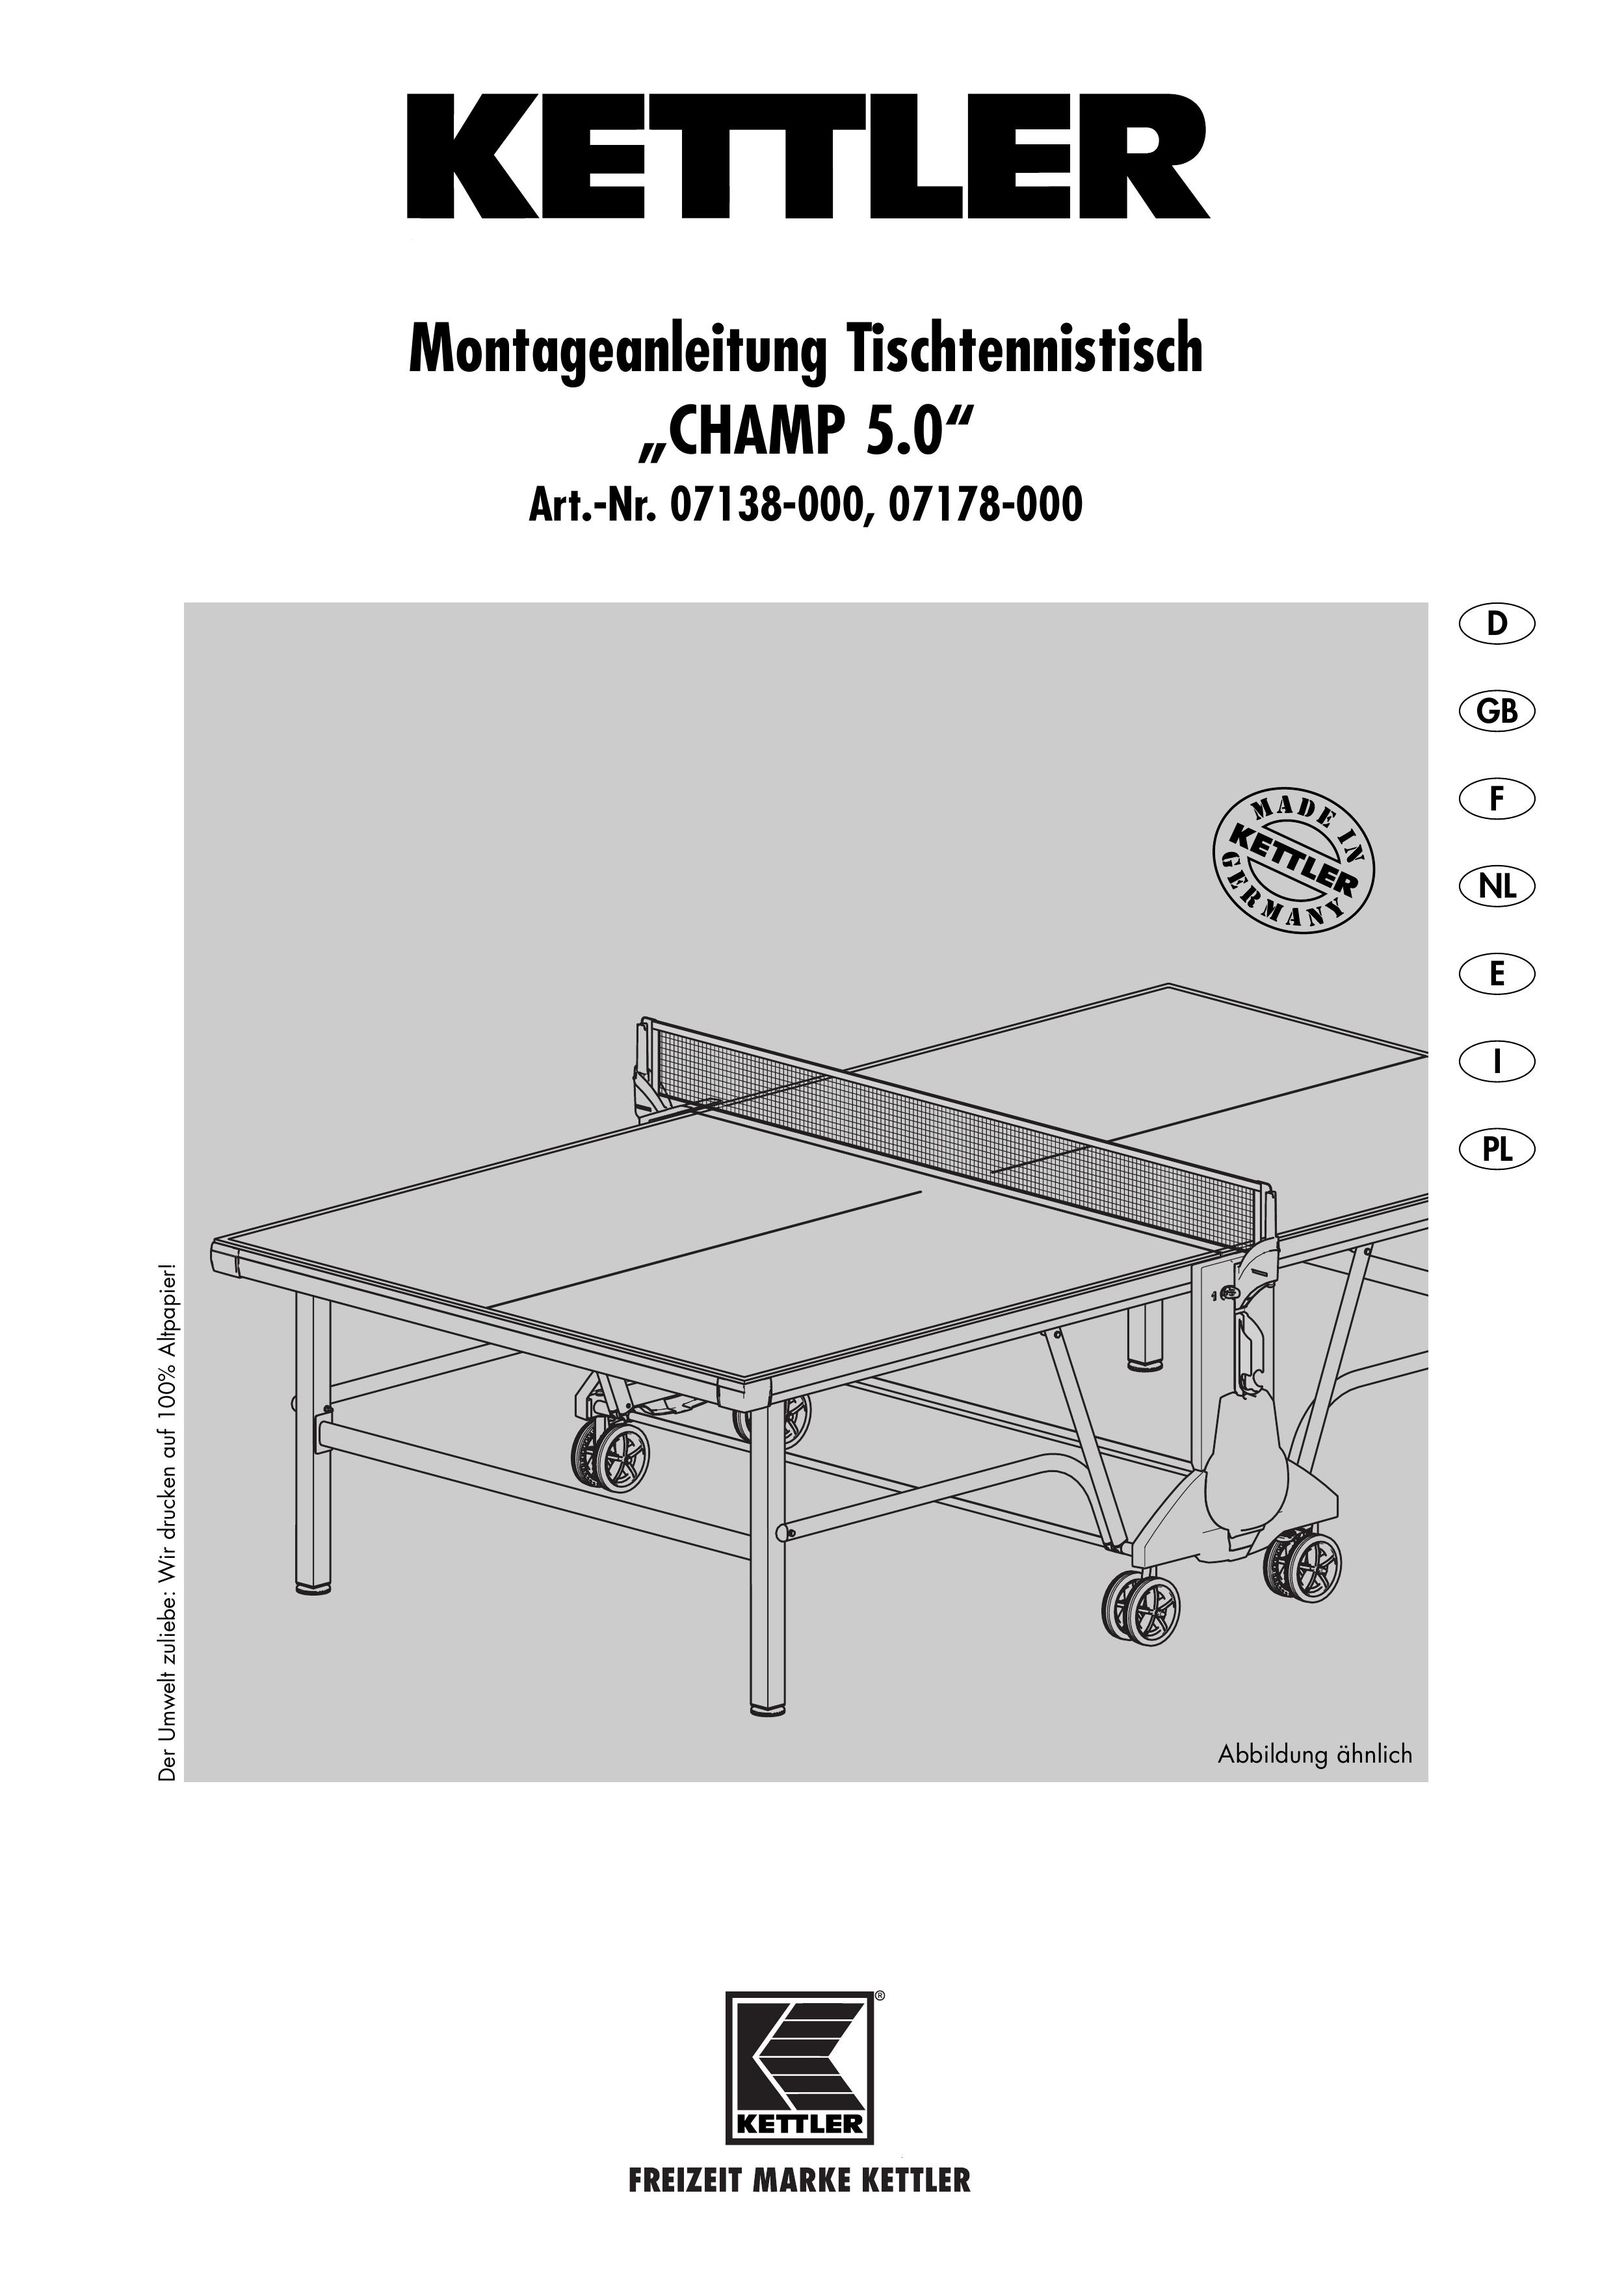 Kettler 07178-000 Table Top Game User Manual